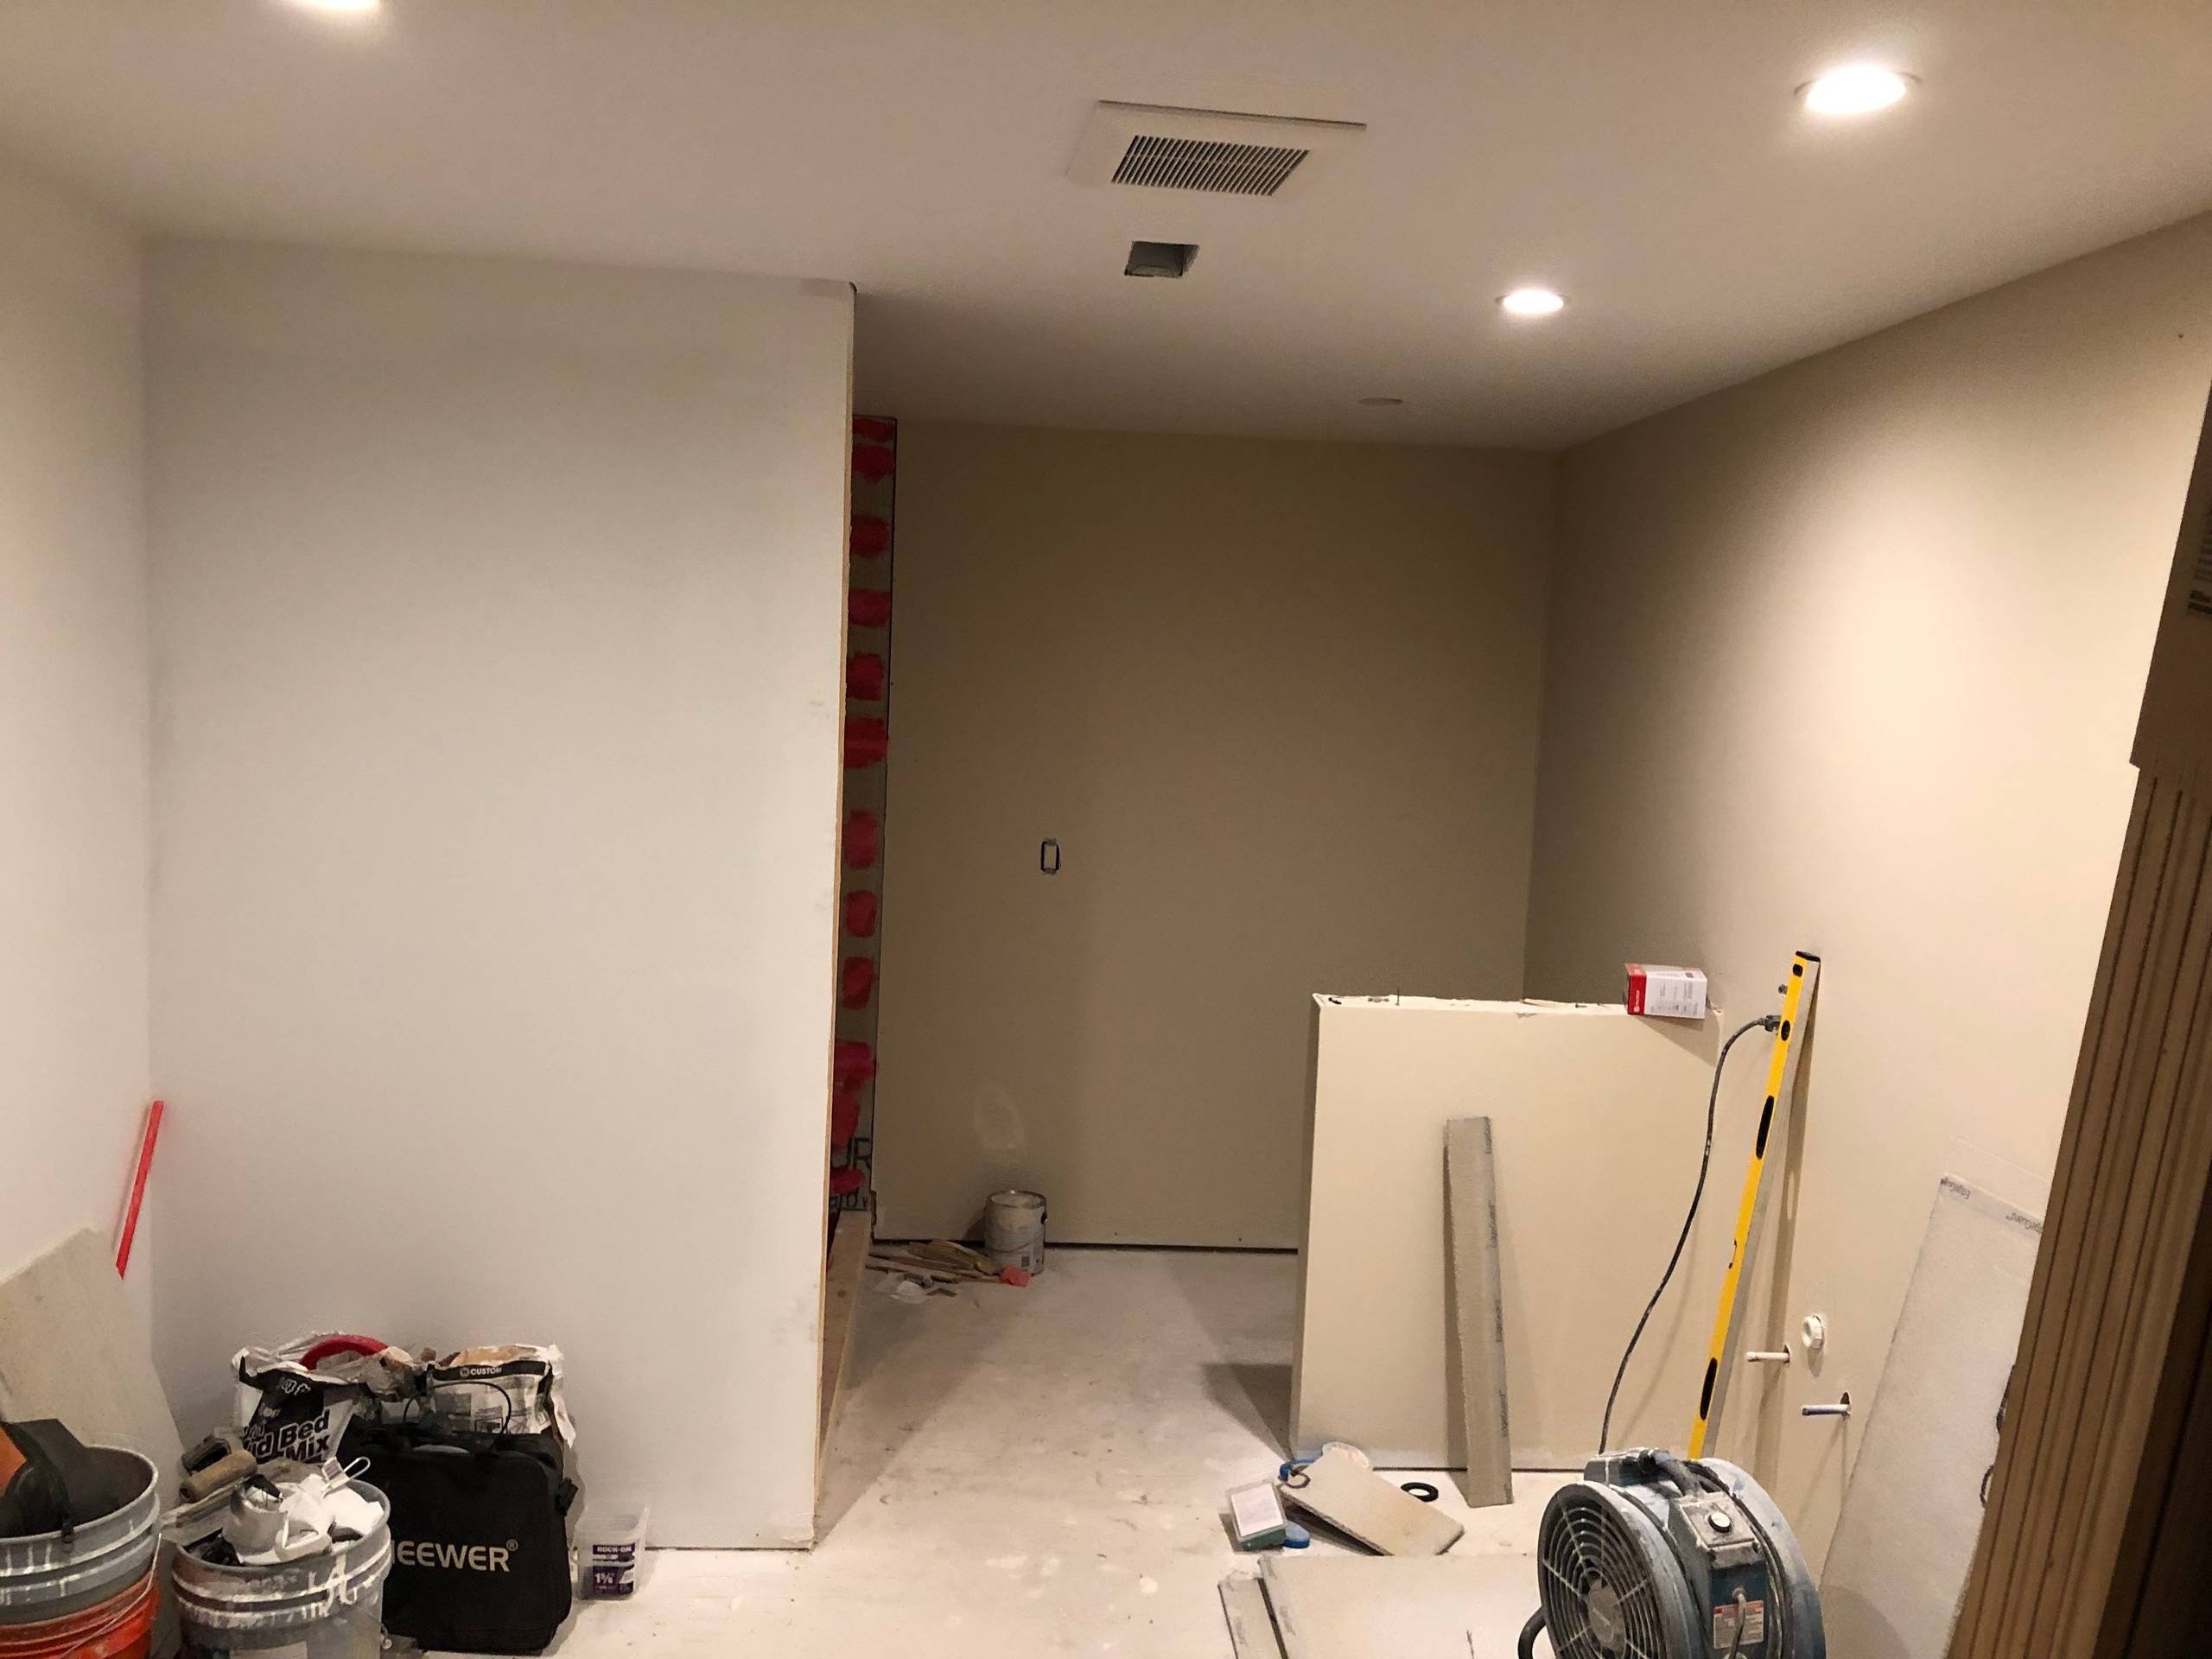 New construction basement finish